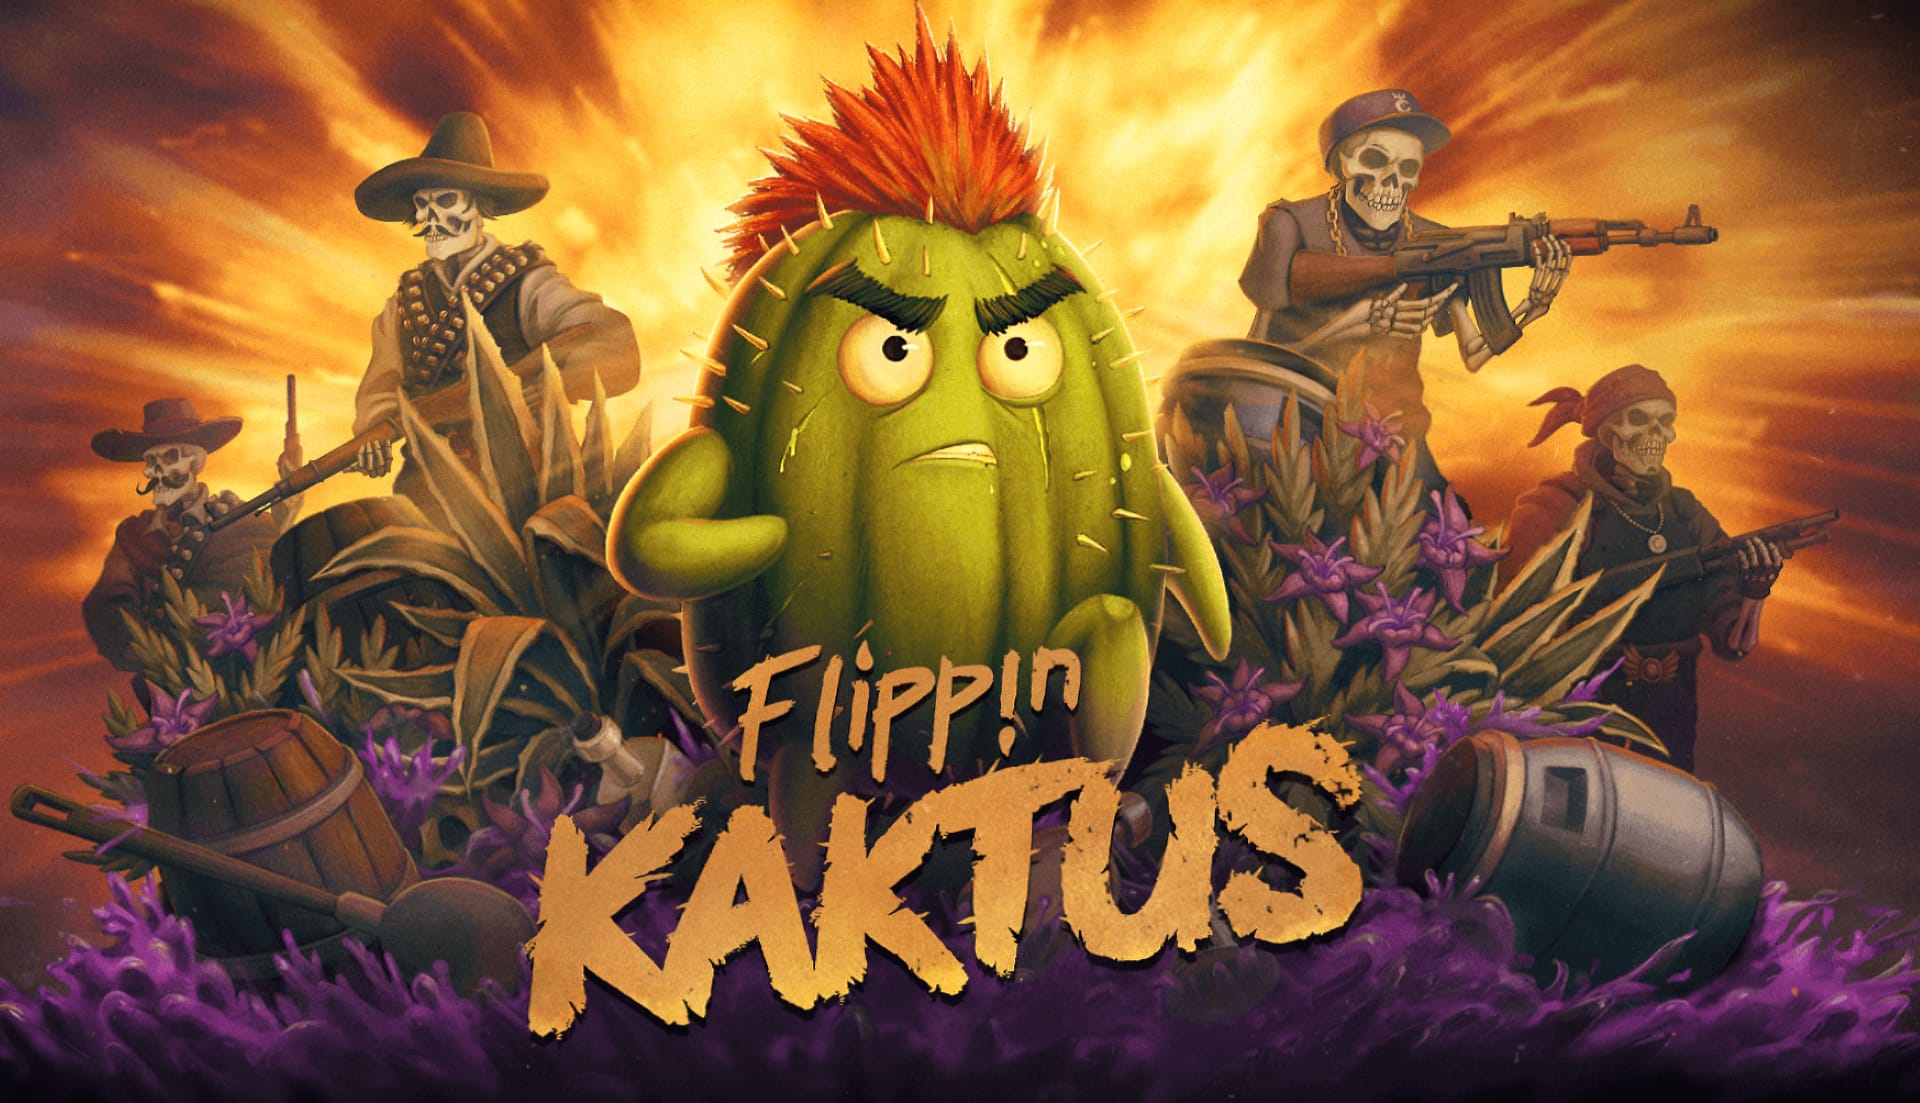 Flippin Kaktus at 1024 x 1024 iPad size wallpapers HD quality